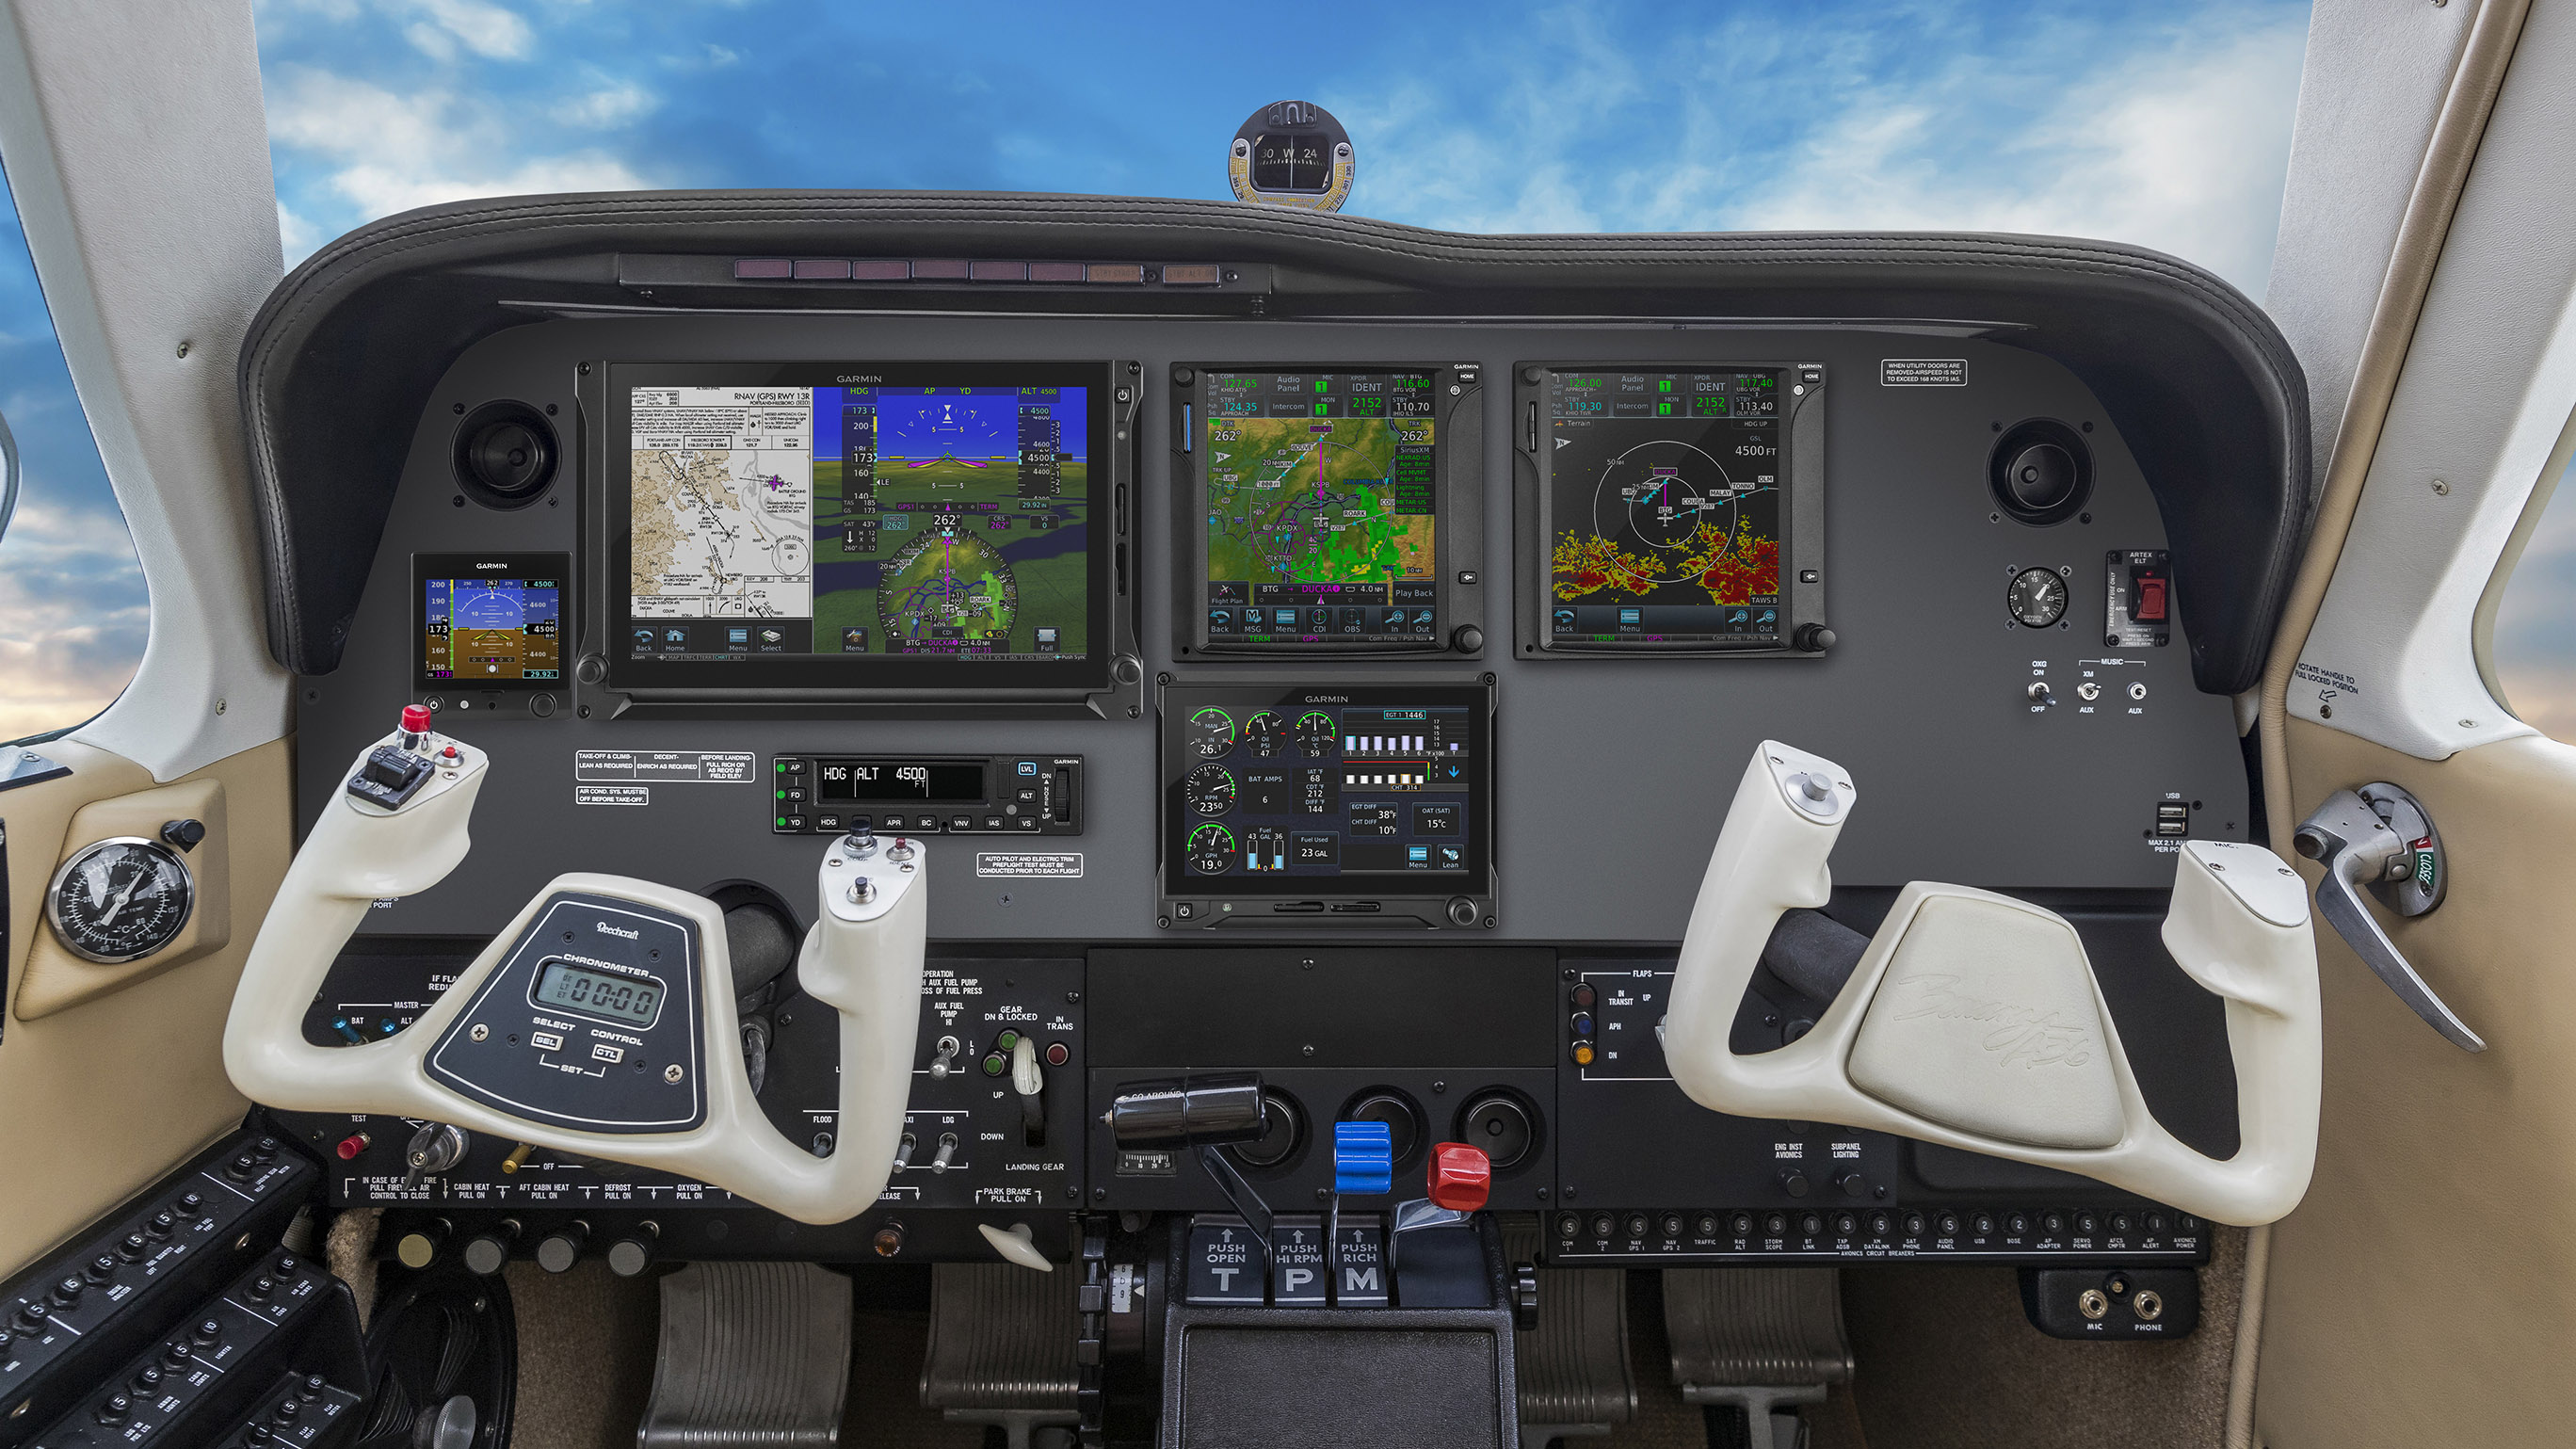 The Garmin GFC 600 autopilot, G5 flight instrument, and TXi flight displays are installed on a Beechcraft Bonanza. Image courtesy of Garmin.